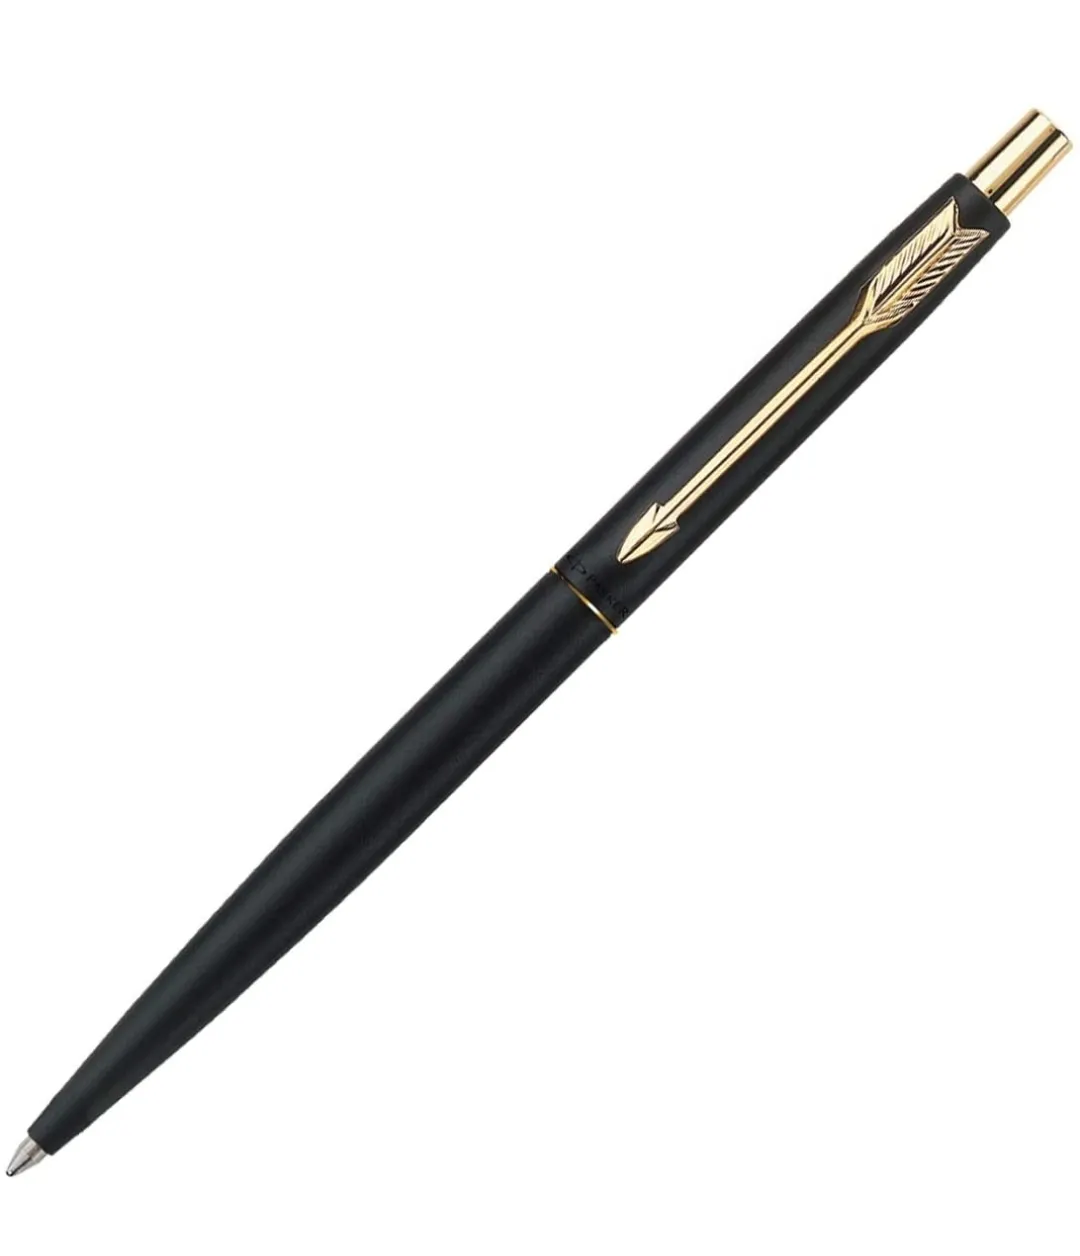 Parker Classic Matte Black Gold Trim Ball Pen (Pack of 1)